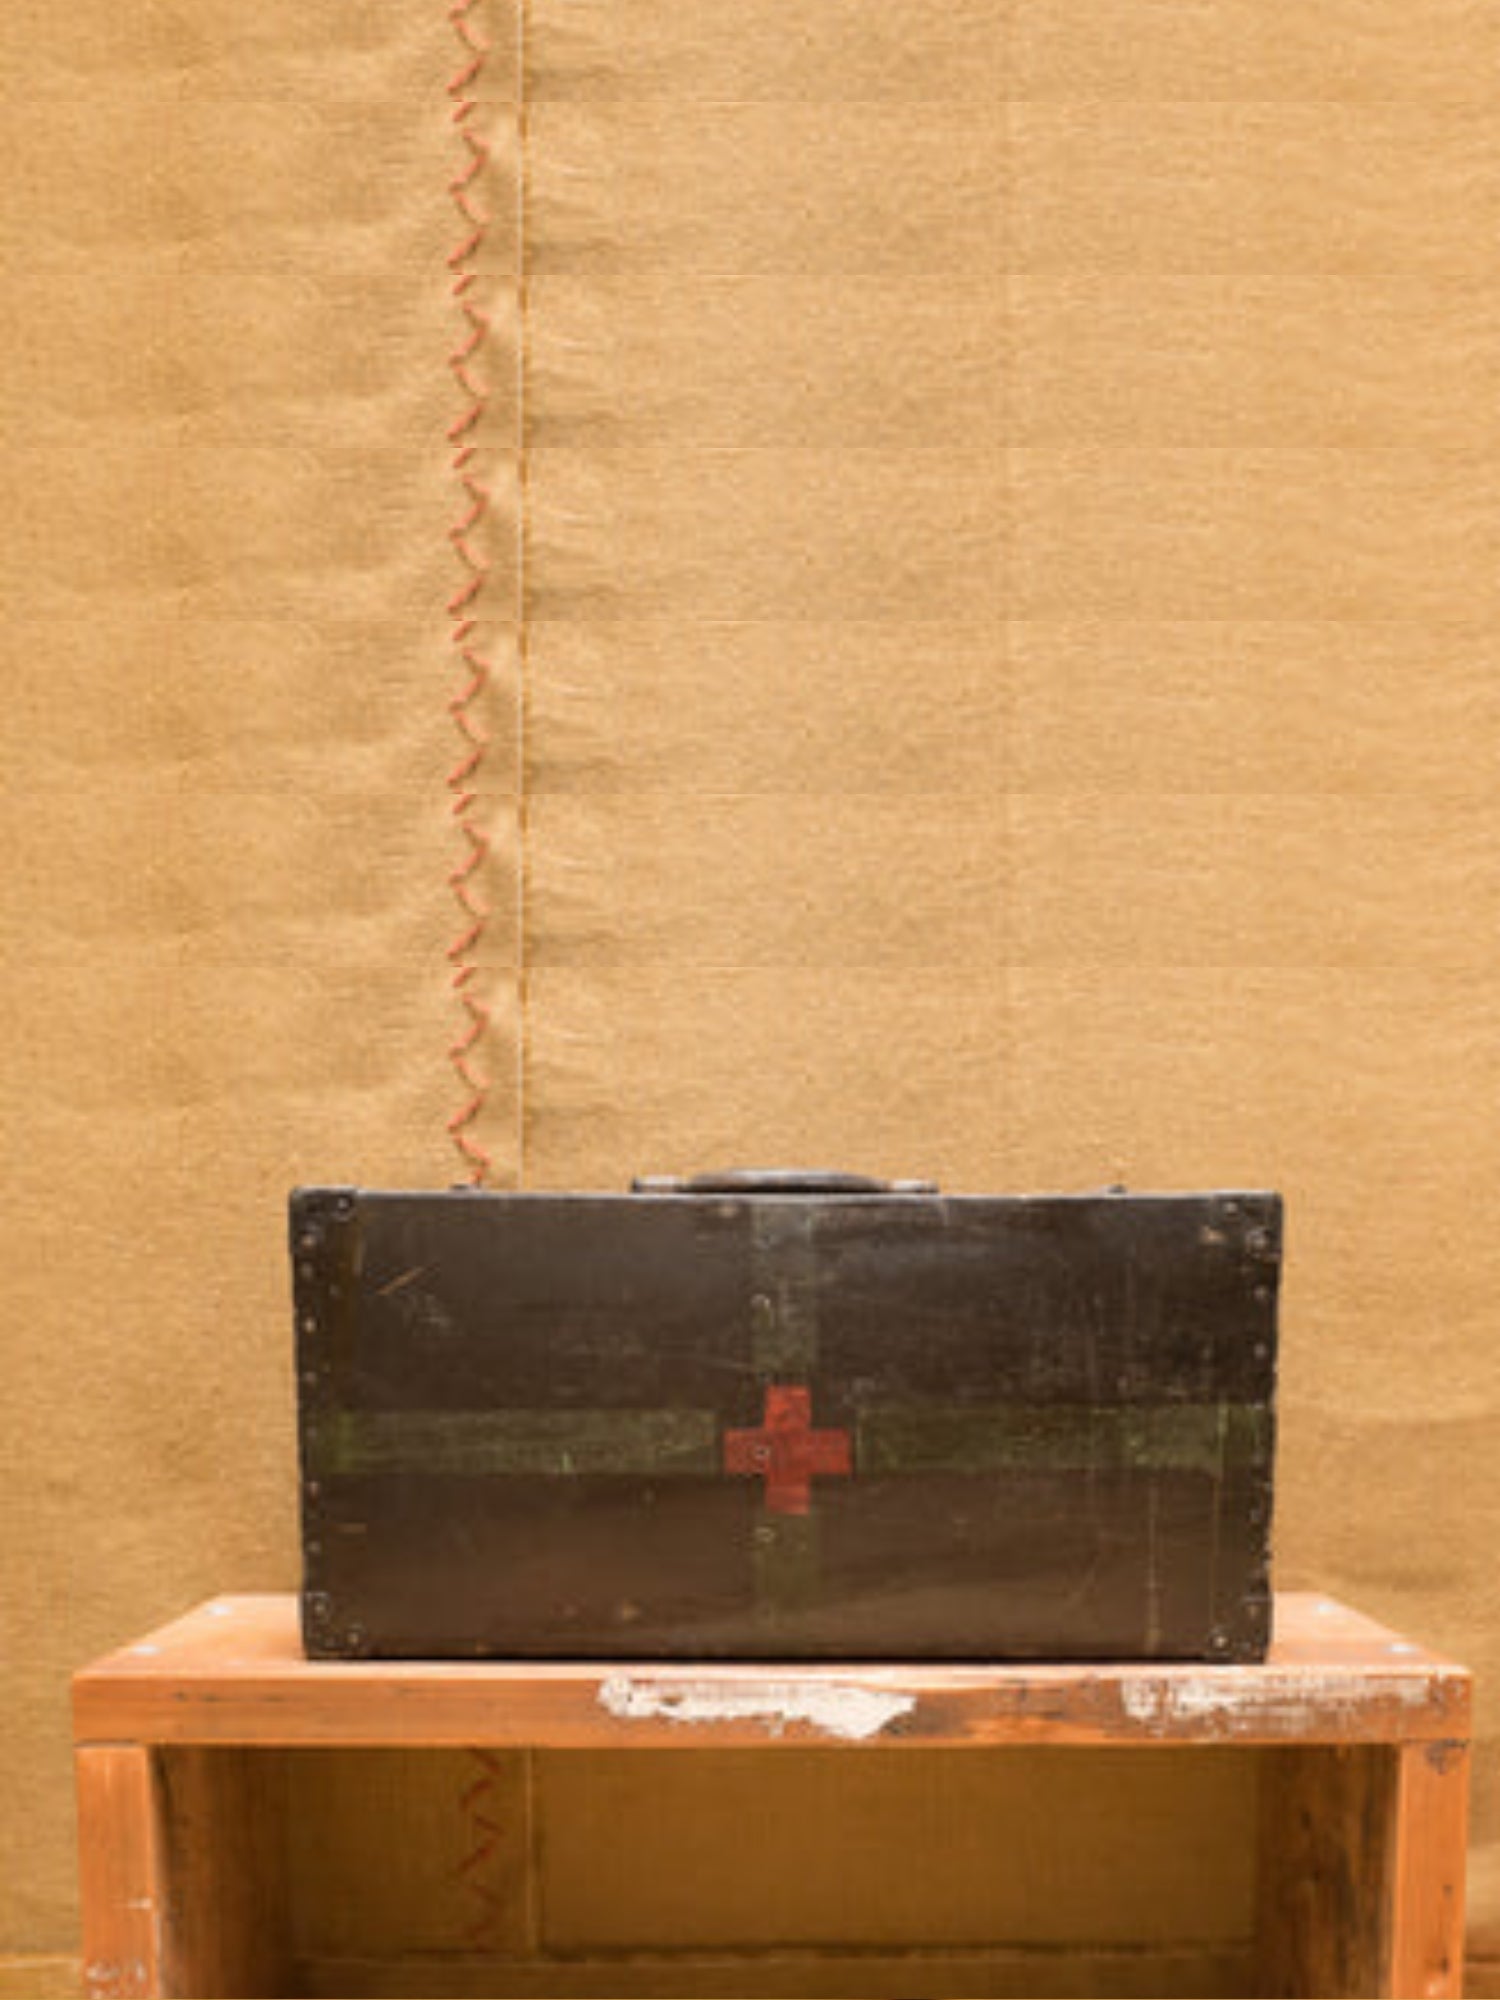 Loan's Red Cross suitcase